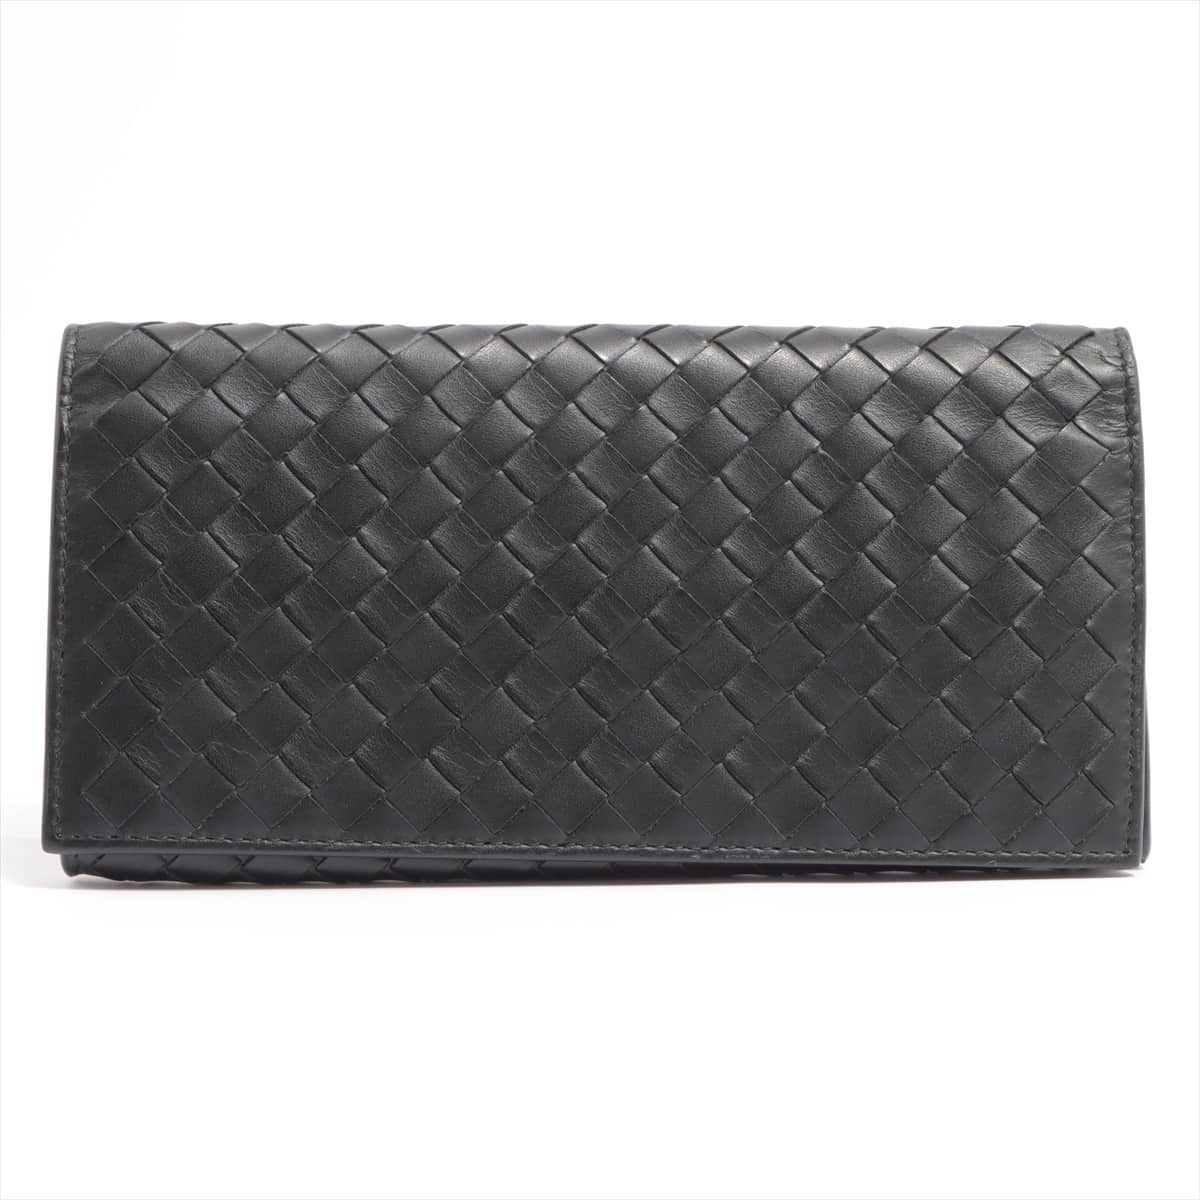 Bottega Veneta Intrecciato Leather Wallet Black